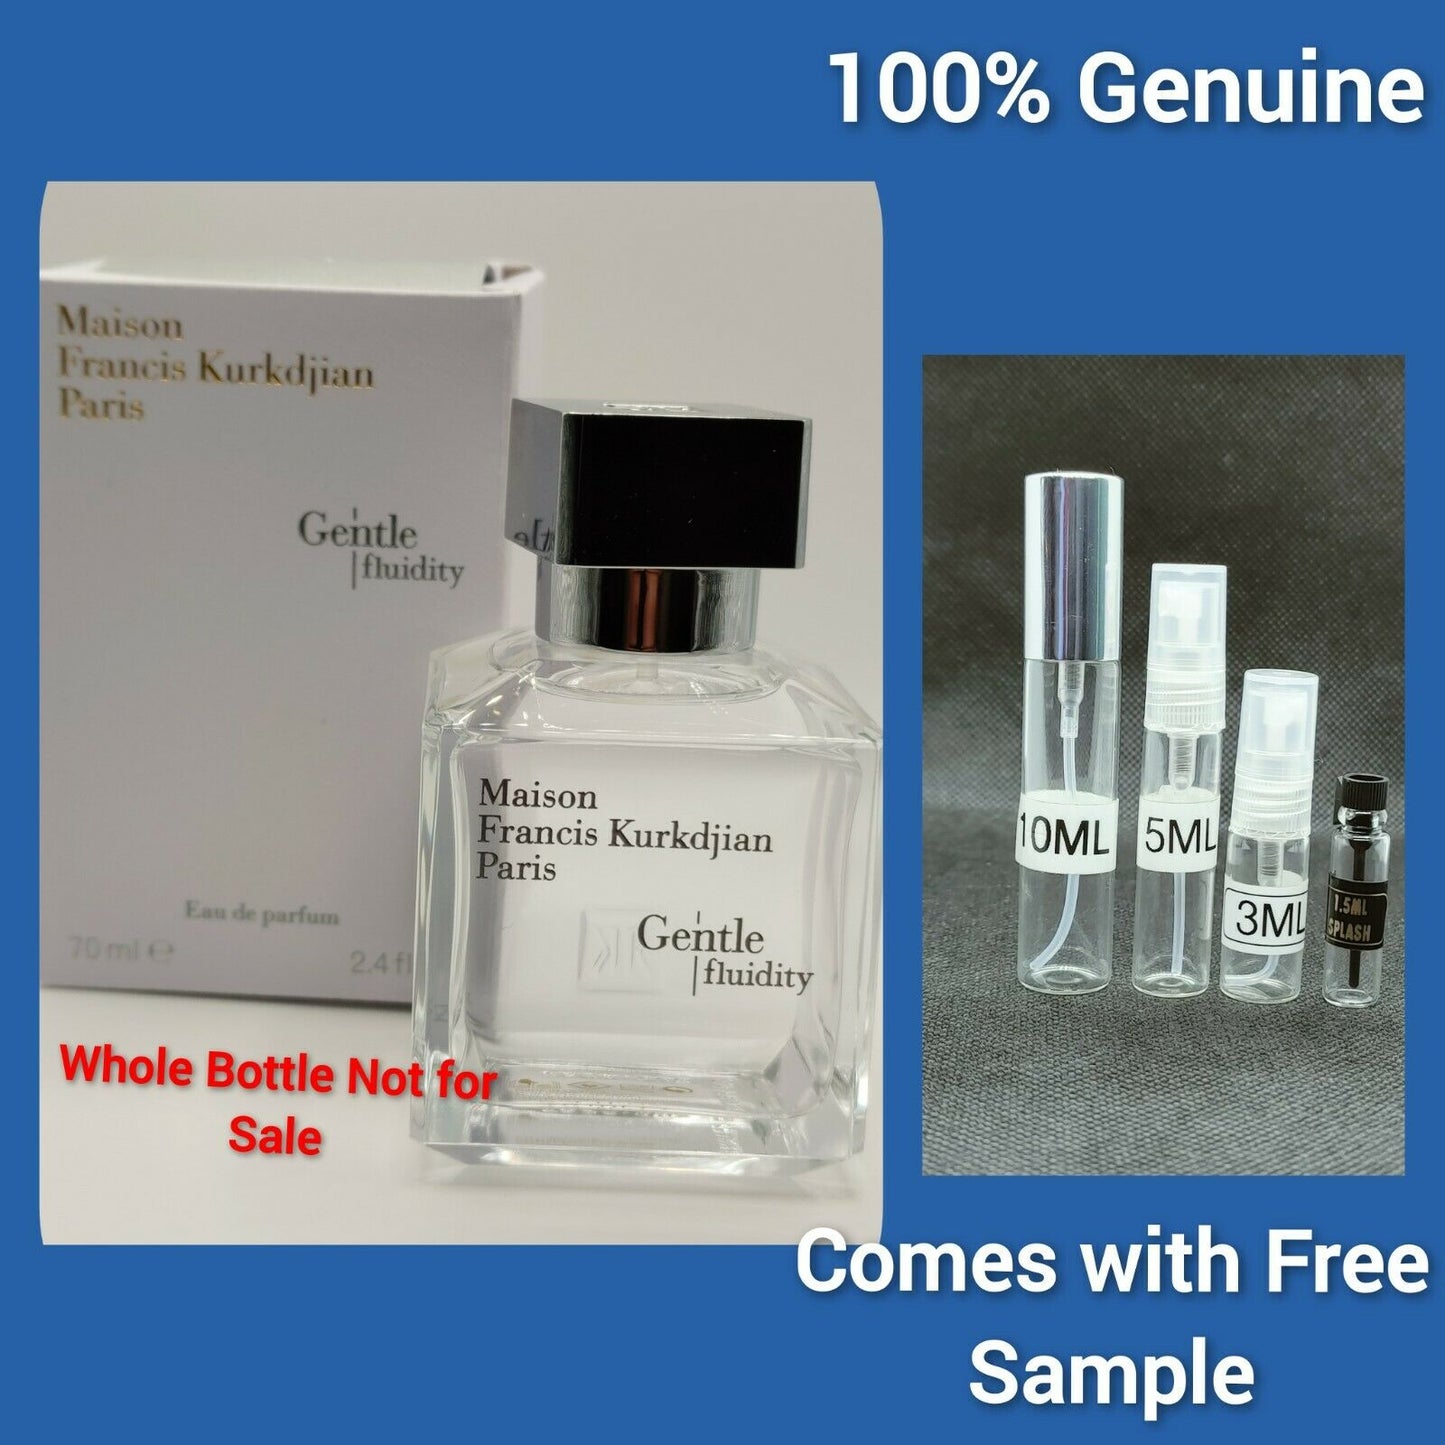 Maison Frances Kurkdjan  Gentle Fluidity Silver  Samples Plus Free Sample+bag